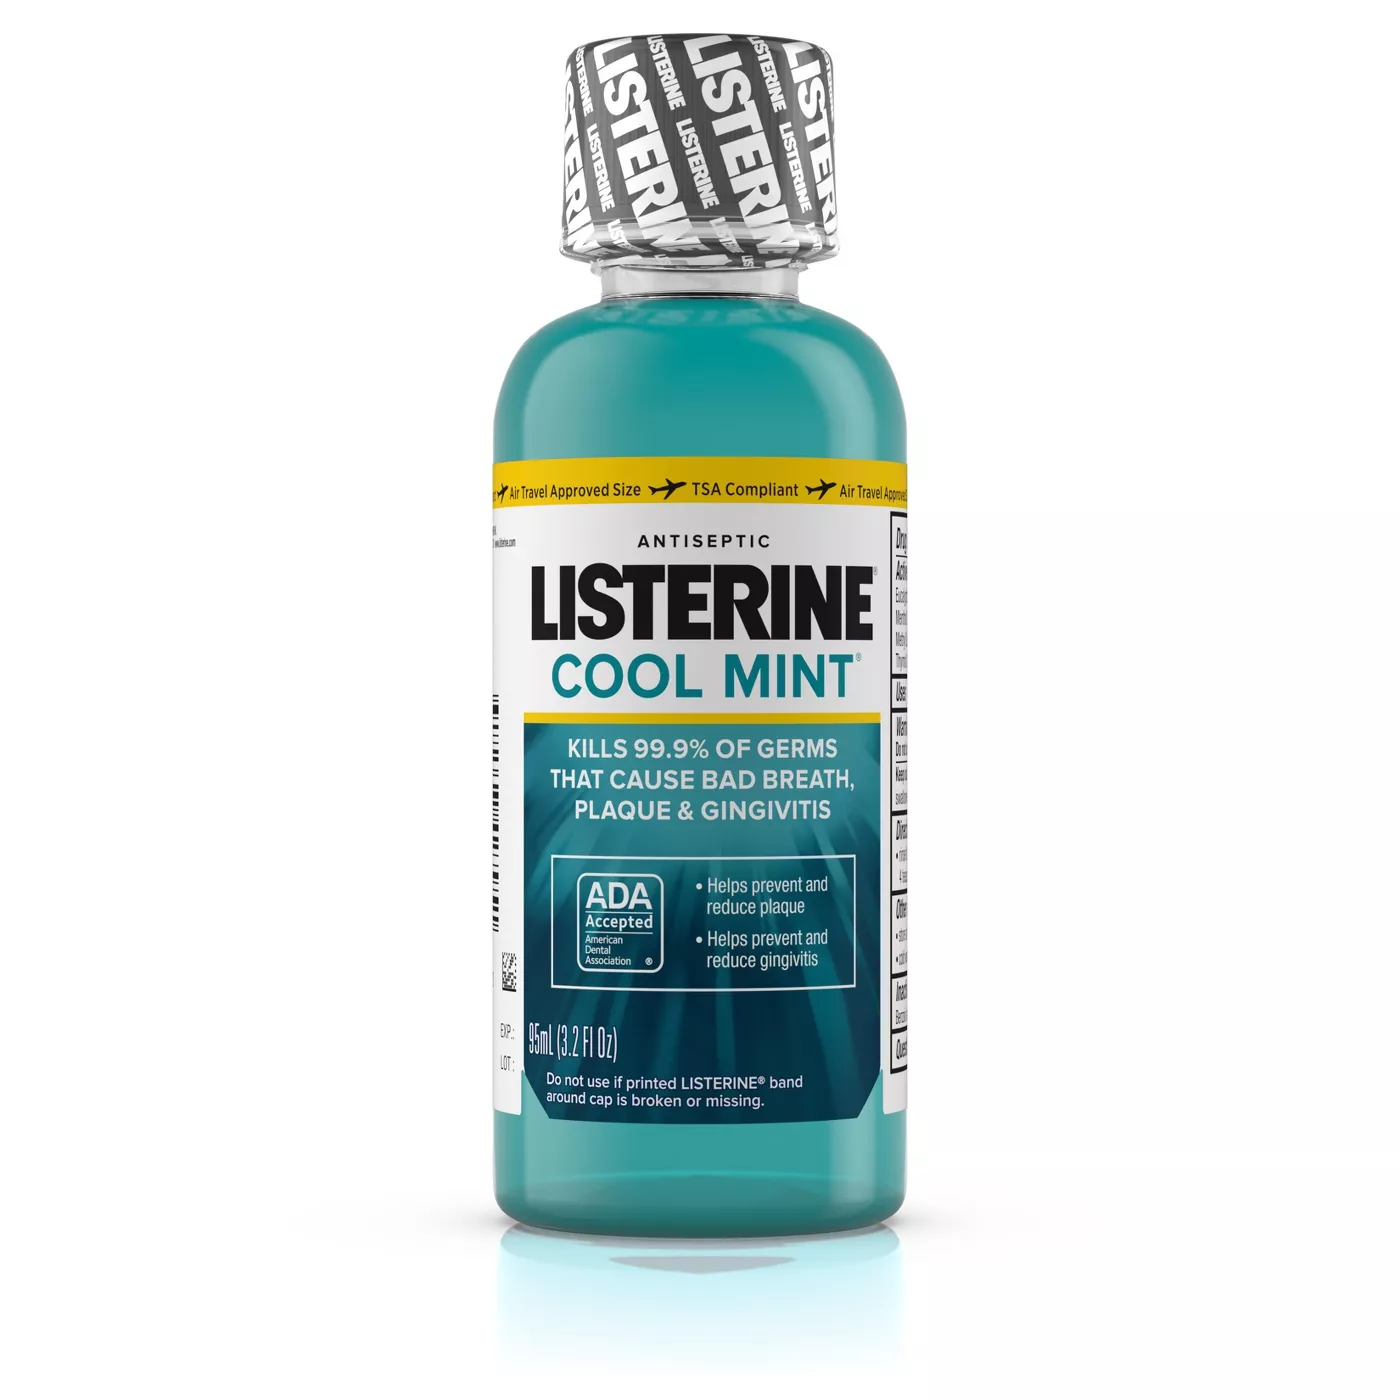 Listerine Cool Mint Antiseptic Mouthwash - image 1 of 9